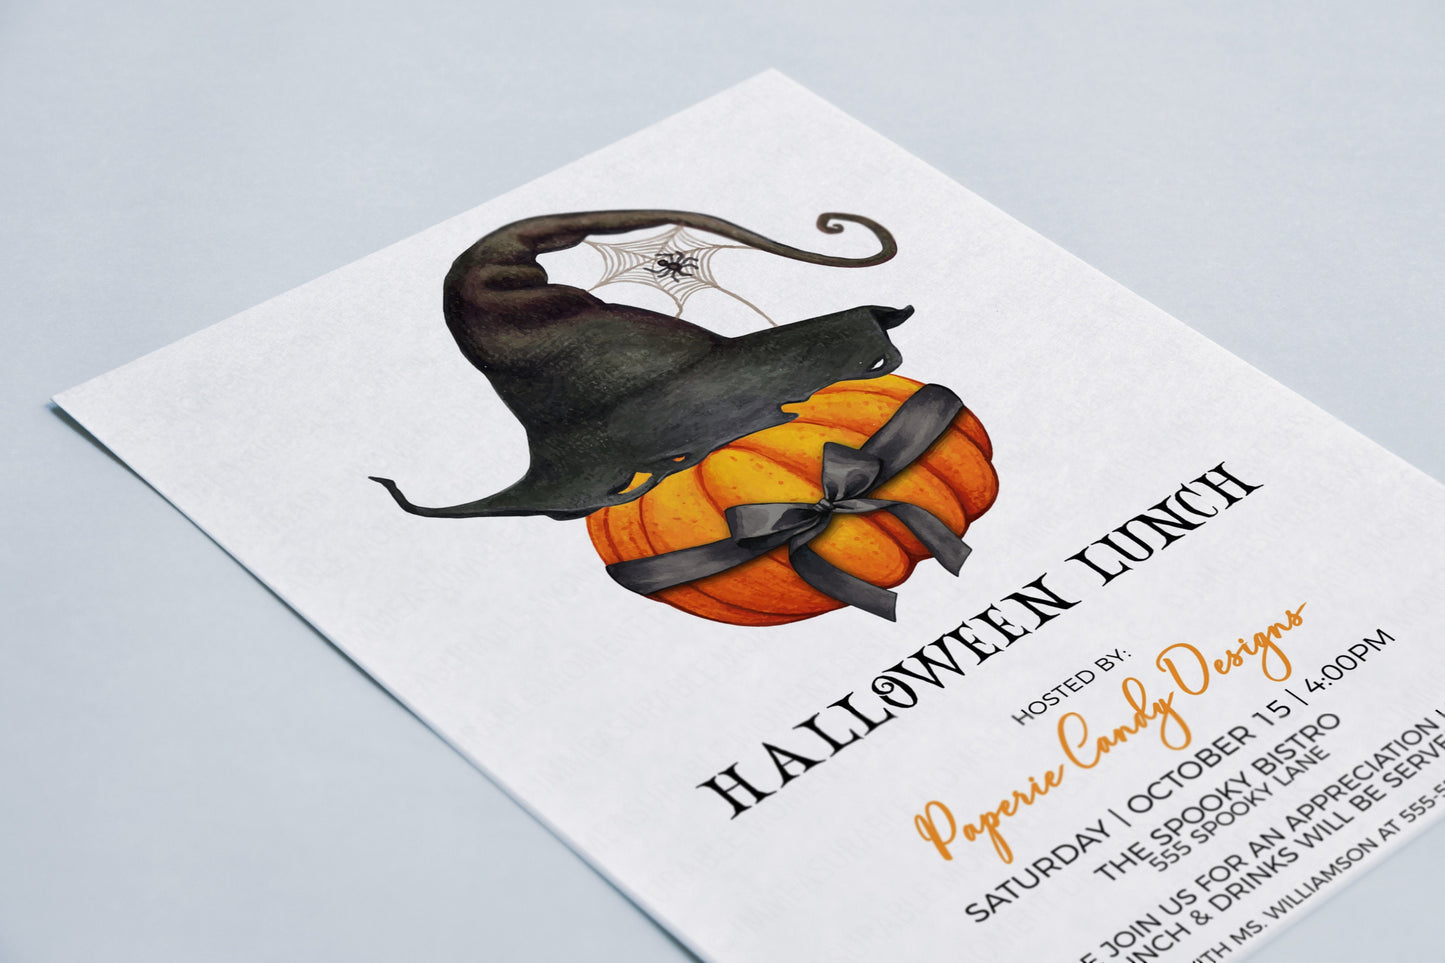 Editable Halloween Invitation, Lunch Brunch Dinner Breakfast, Employee Staff Volunteer Appreciation Minimalist Watercolor Invite, Printable